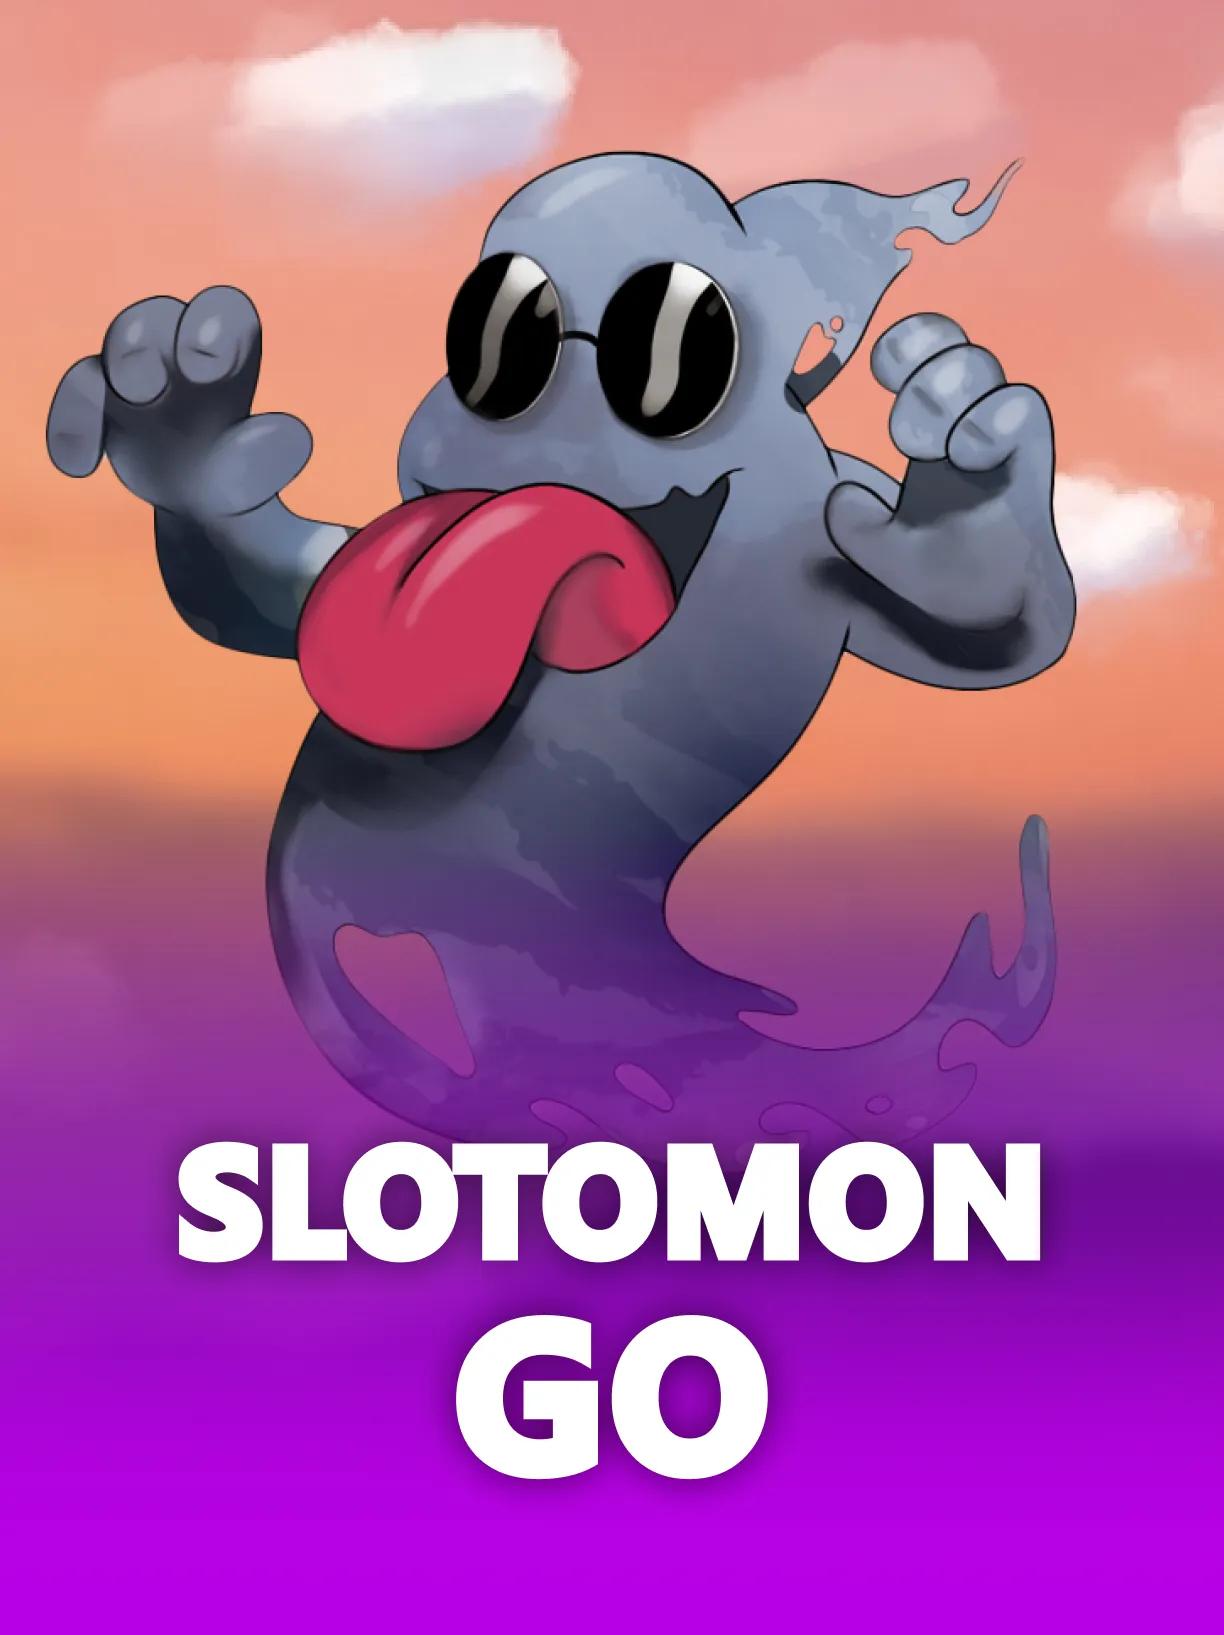 Slotomon_Go_square.webp